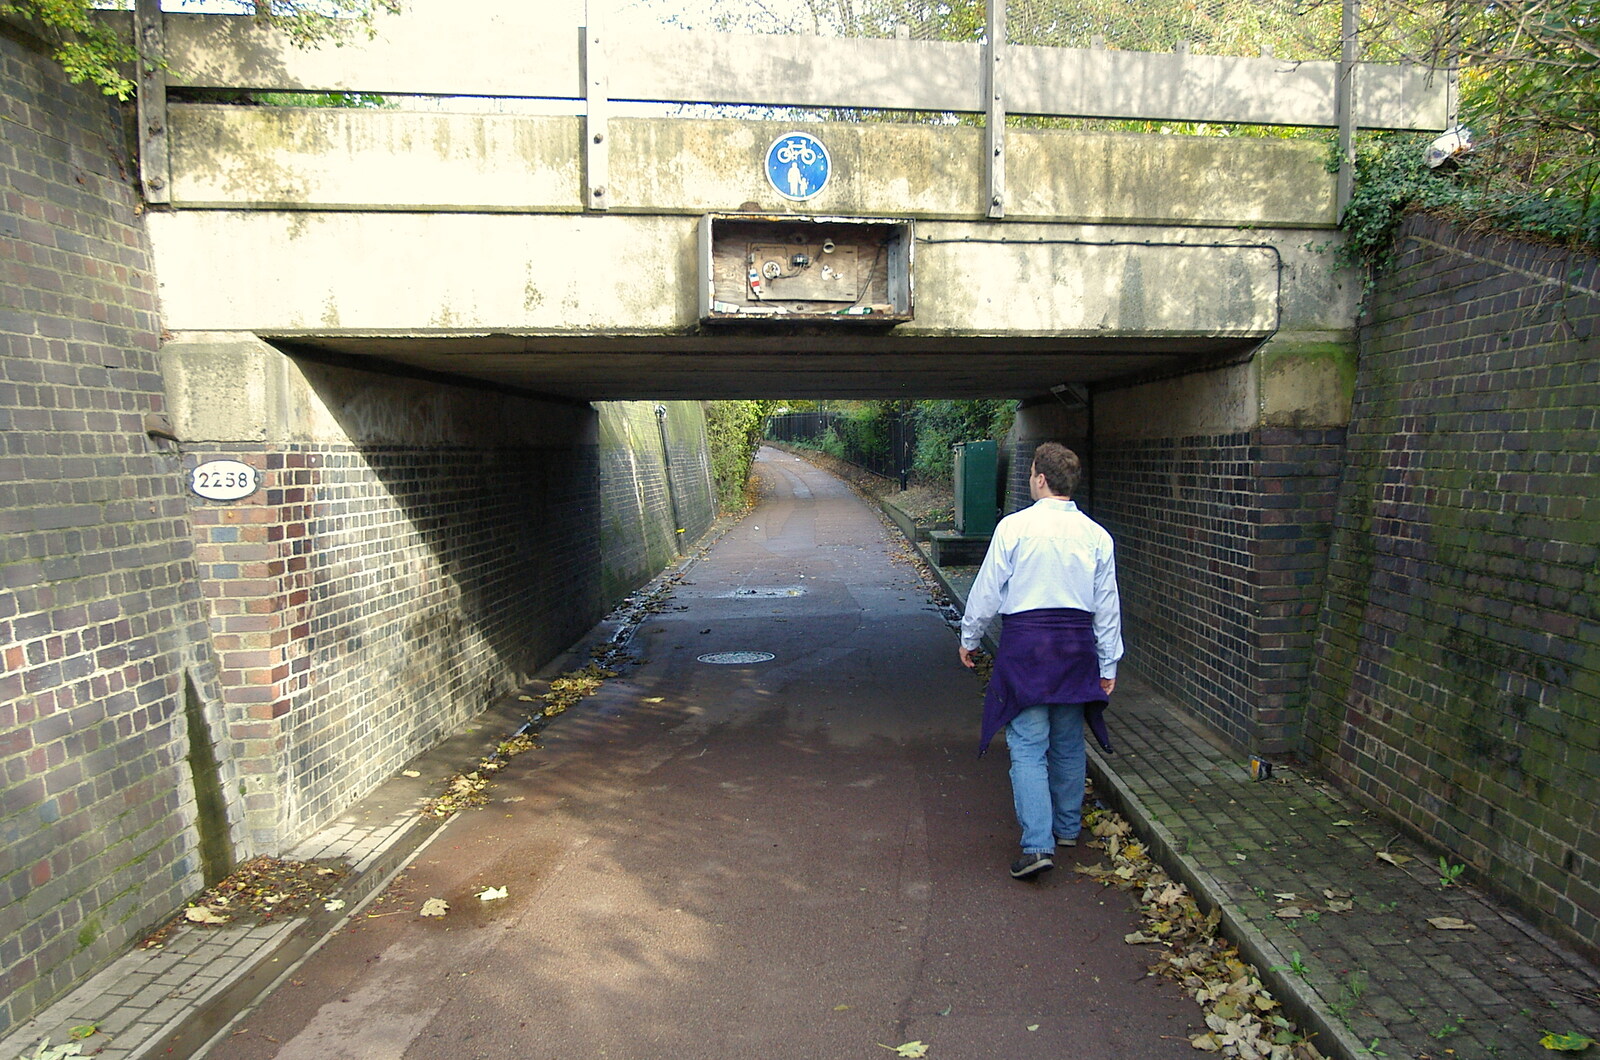 Dan walks through the underpass under the railway from Disused Cambridge Railway, Milton Road, Cambridge - 28th October 2005